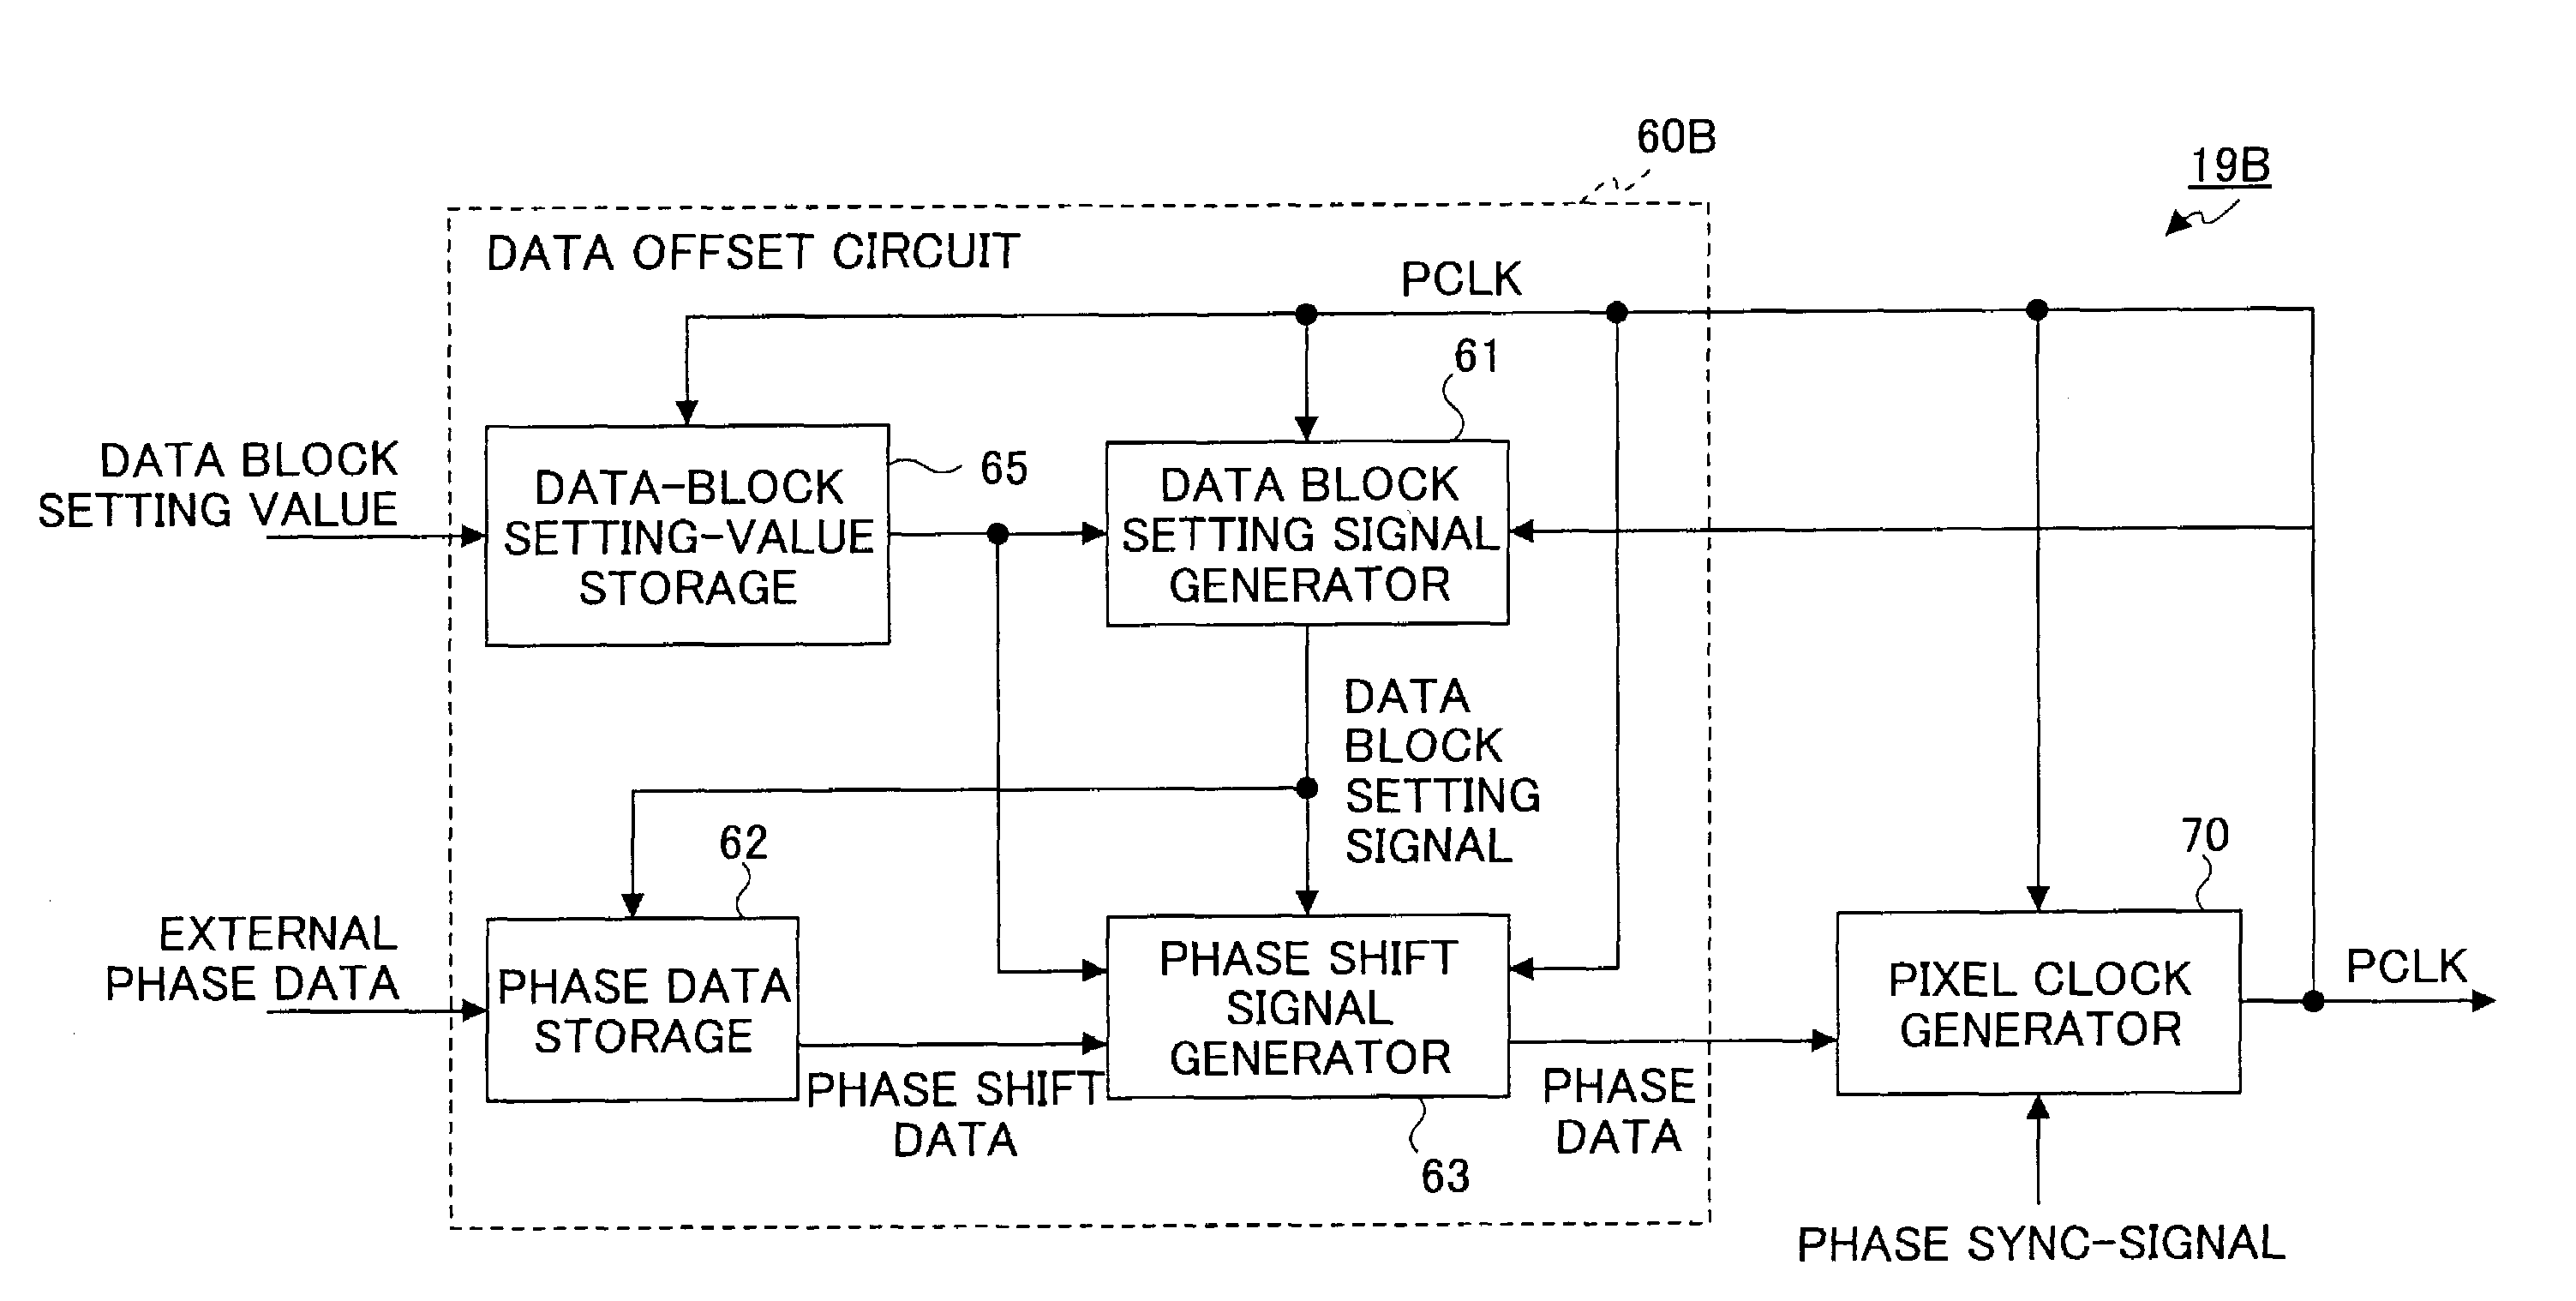 Pixel clock generating apparatus, optical writing apparatus using a pixel clock, imaging apparatus, and method for generating pixel clocks